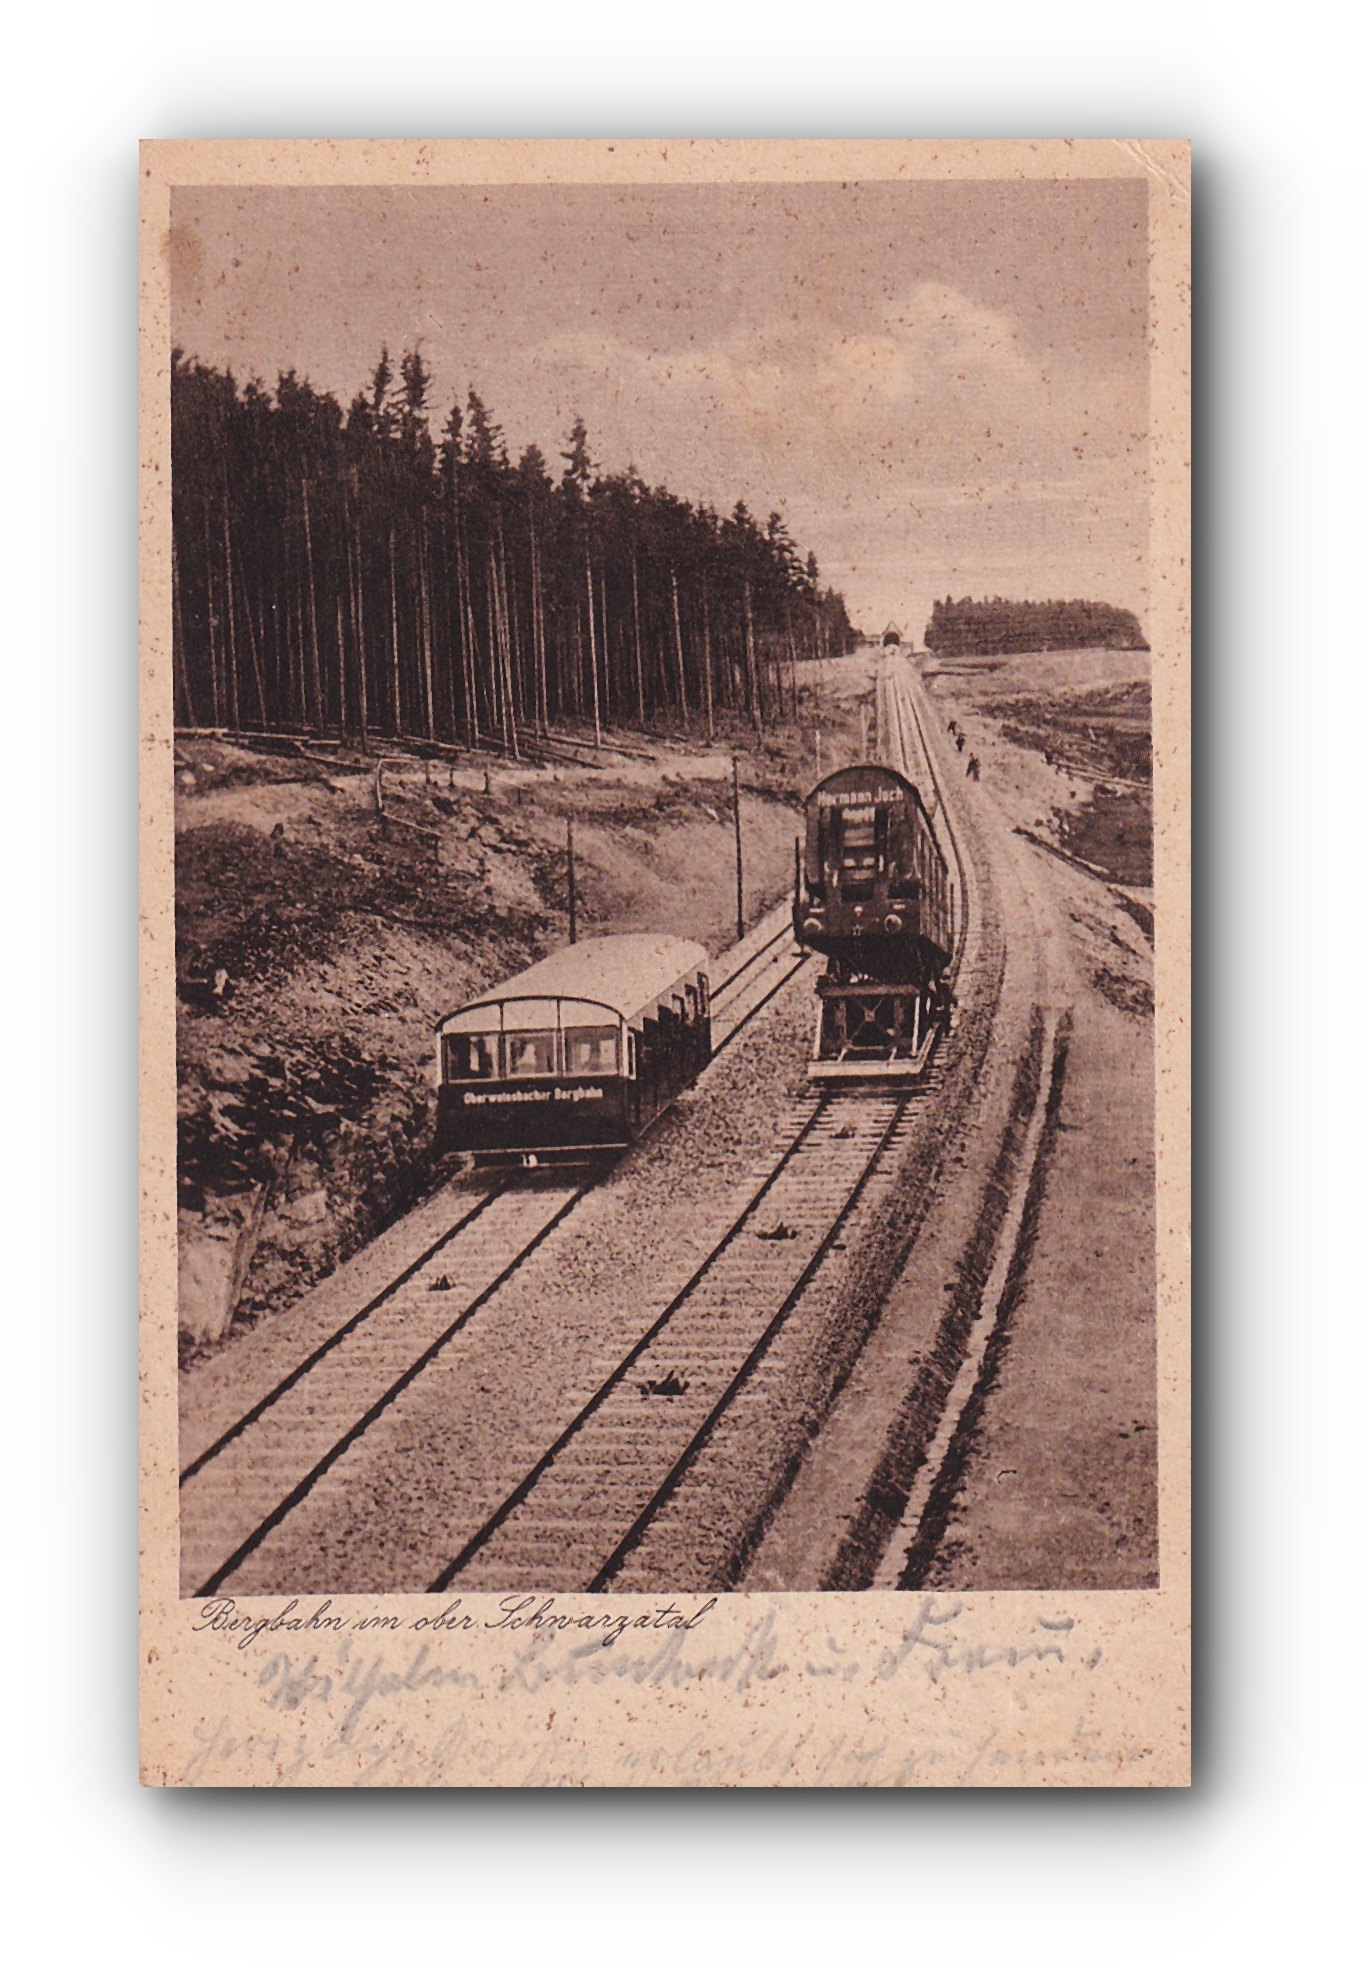 Bergbahn im ober SCHWARZATAL - 09.08.1925